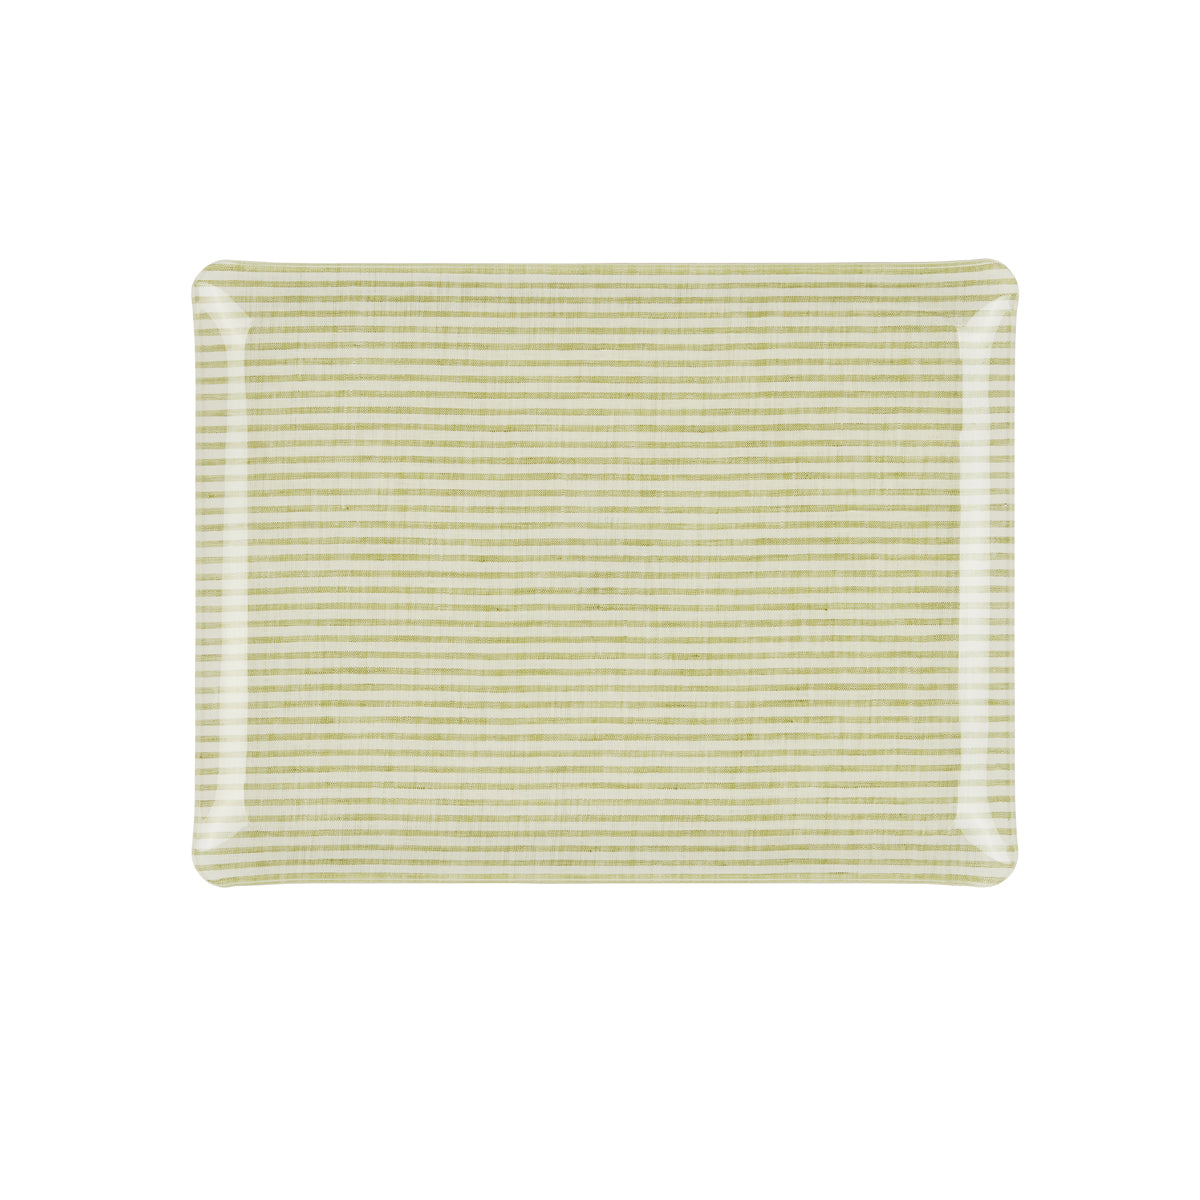 Nina Campbell Fabric Tray Medium - Stripe Green and White